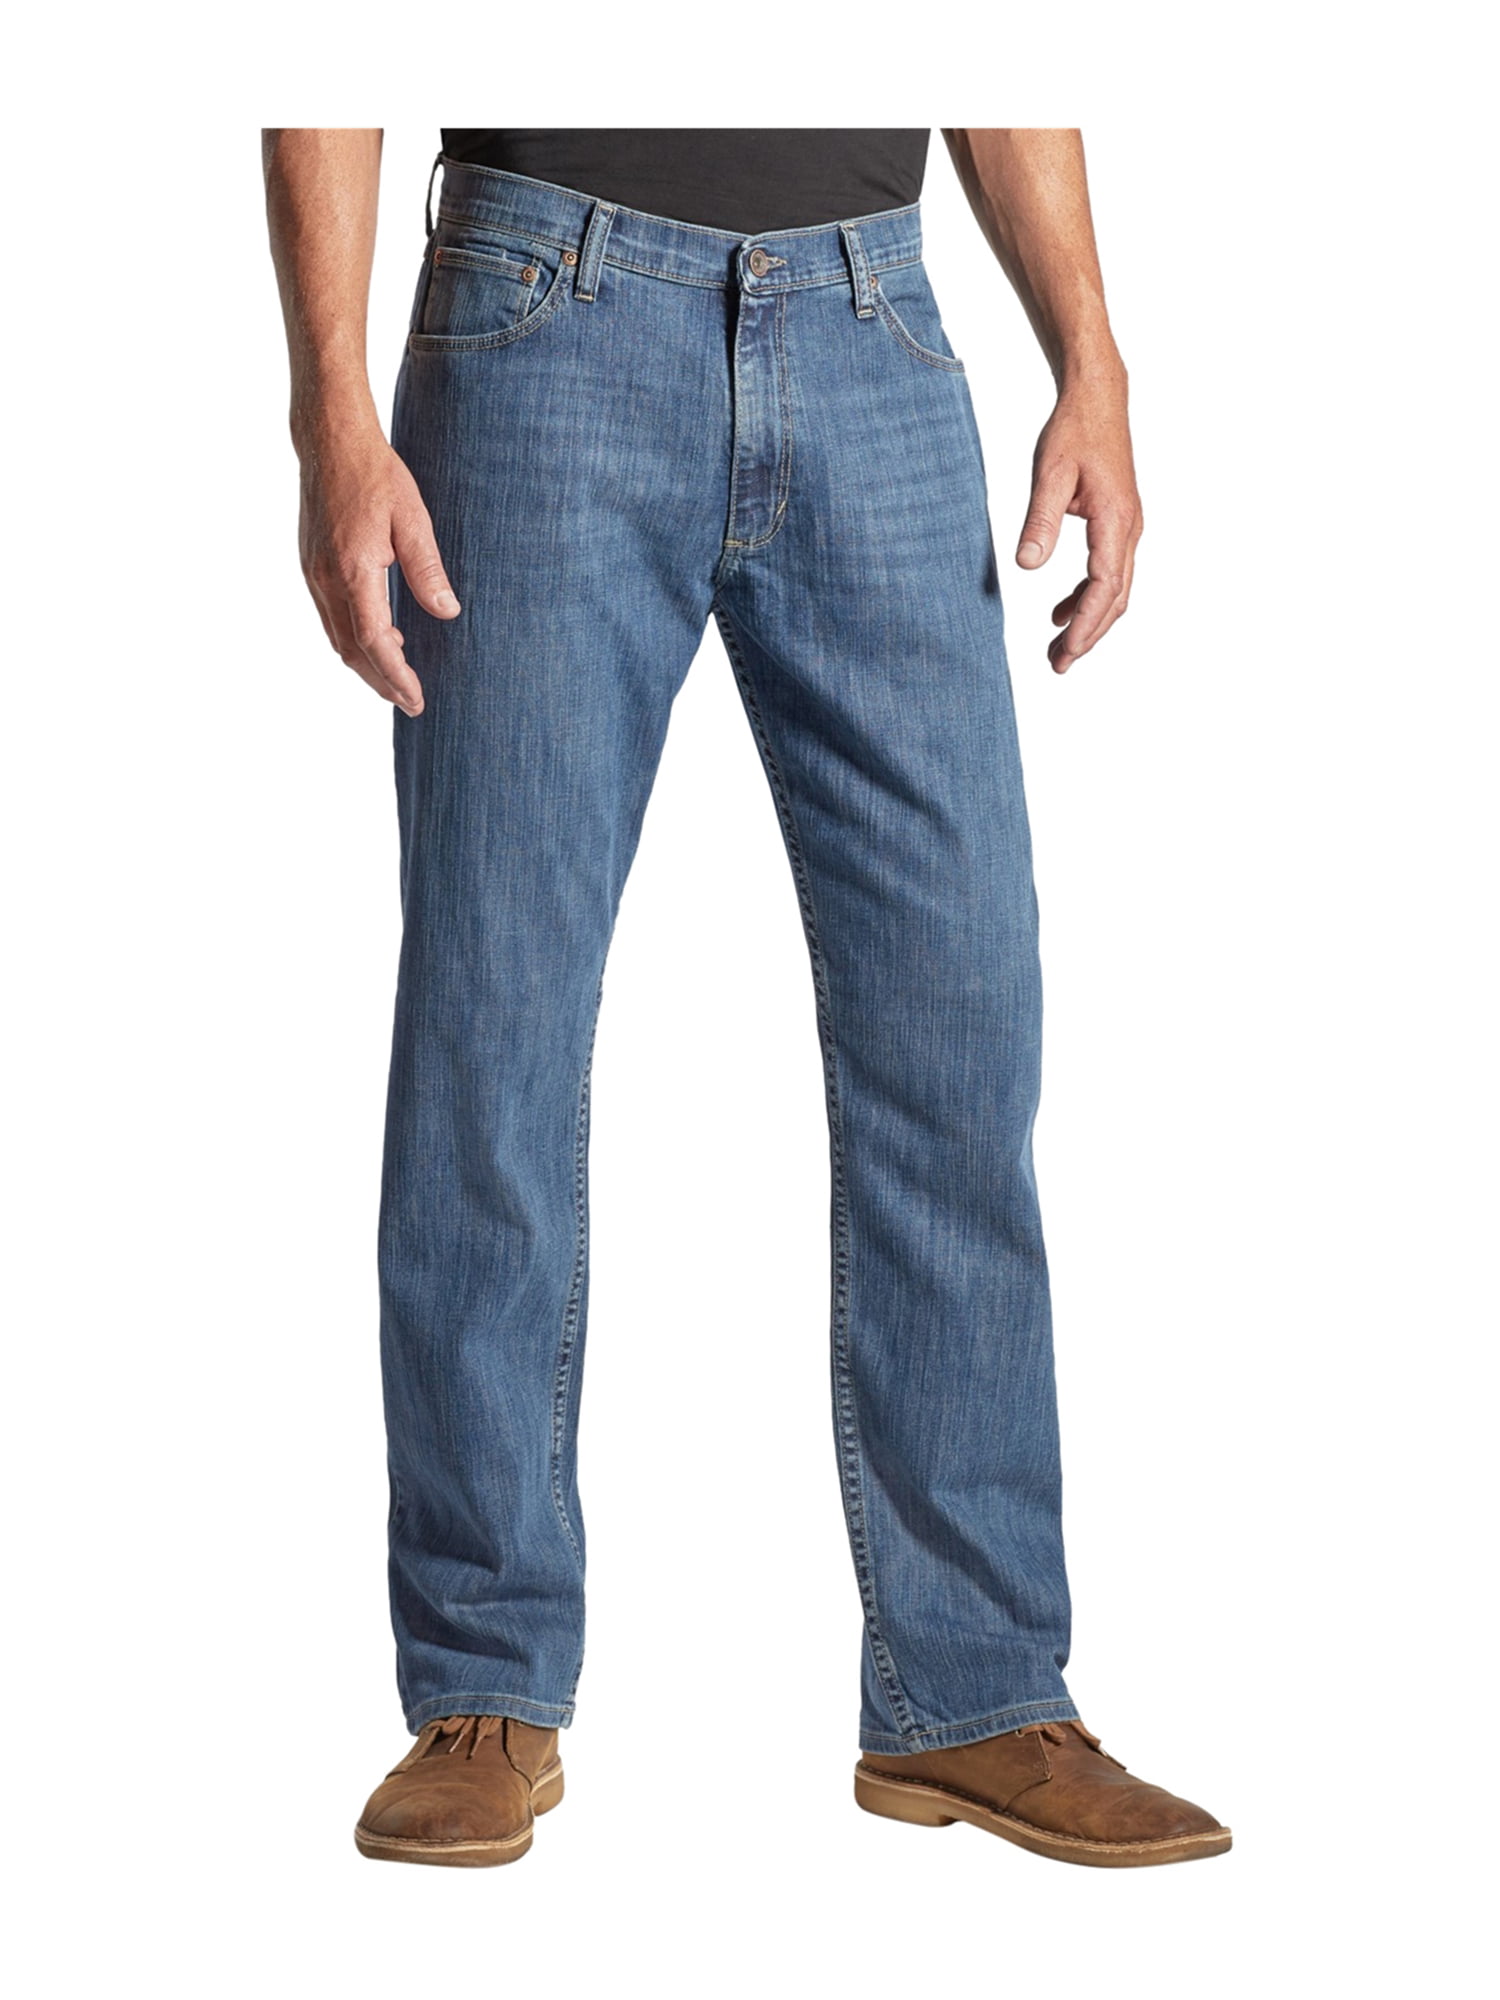 Wrangler Mens Classic Regular Fit Jeans sas 30x30 | Walmart Canada